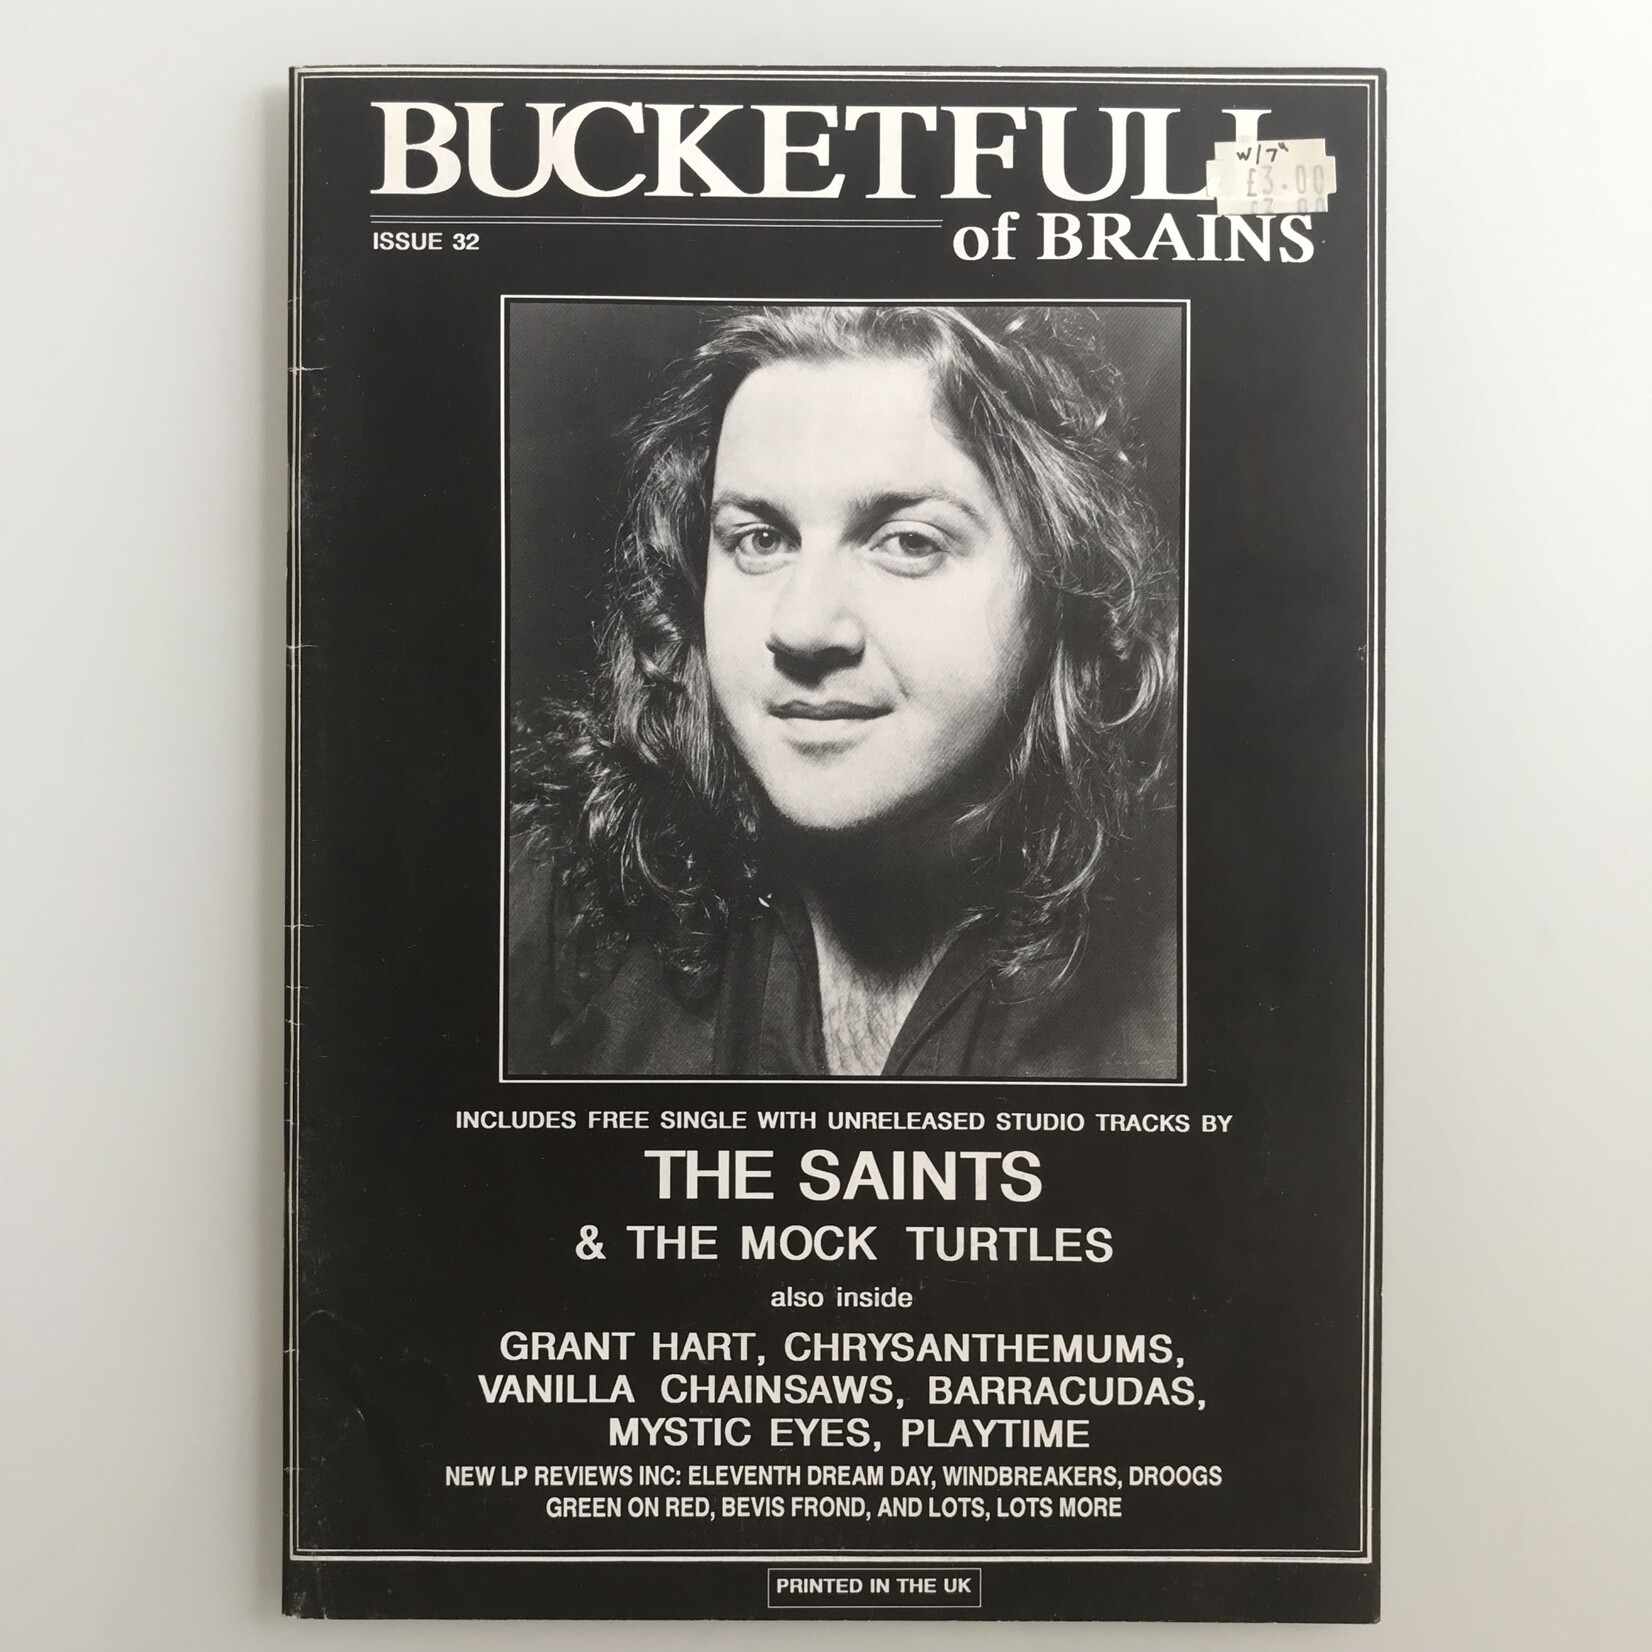 Bucketful Of Brains - Vol. 1 #32 December 1989/January 1990 - Magazine